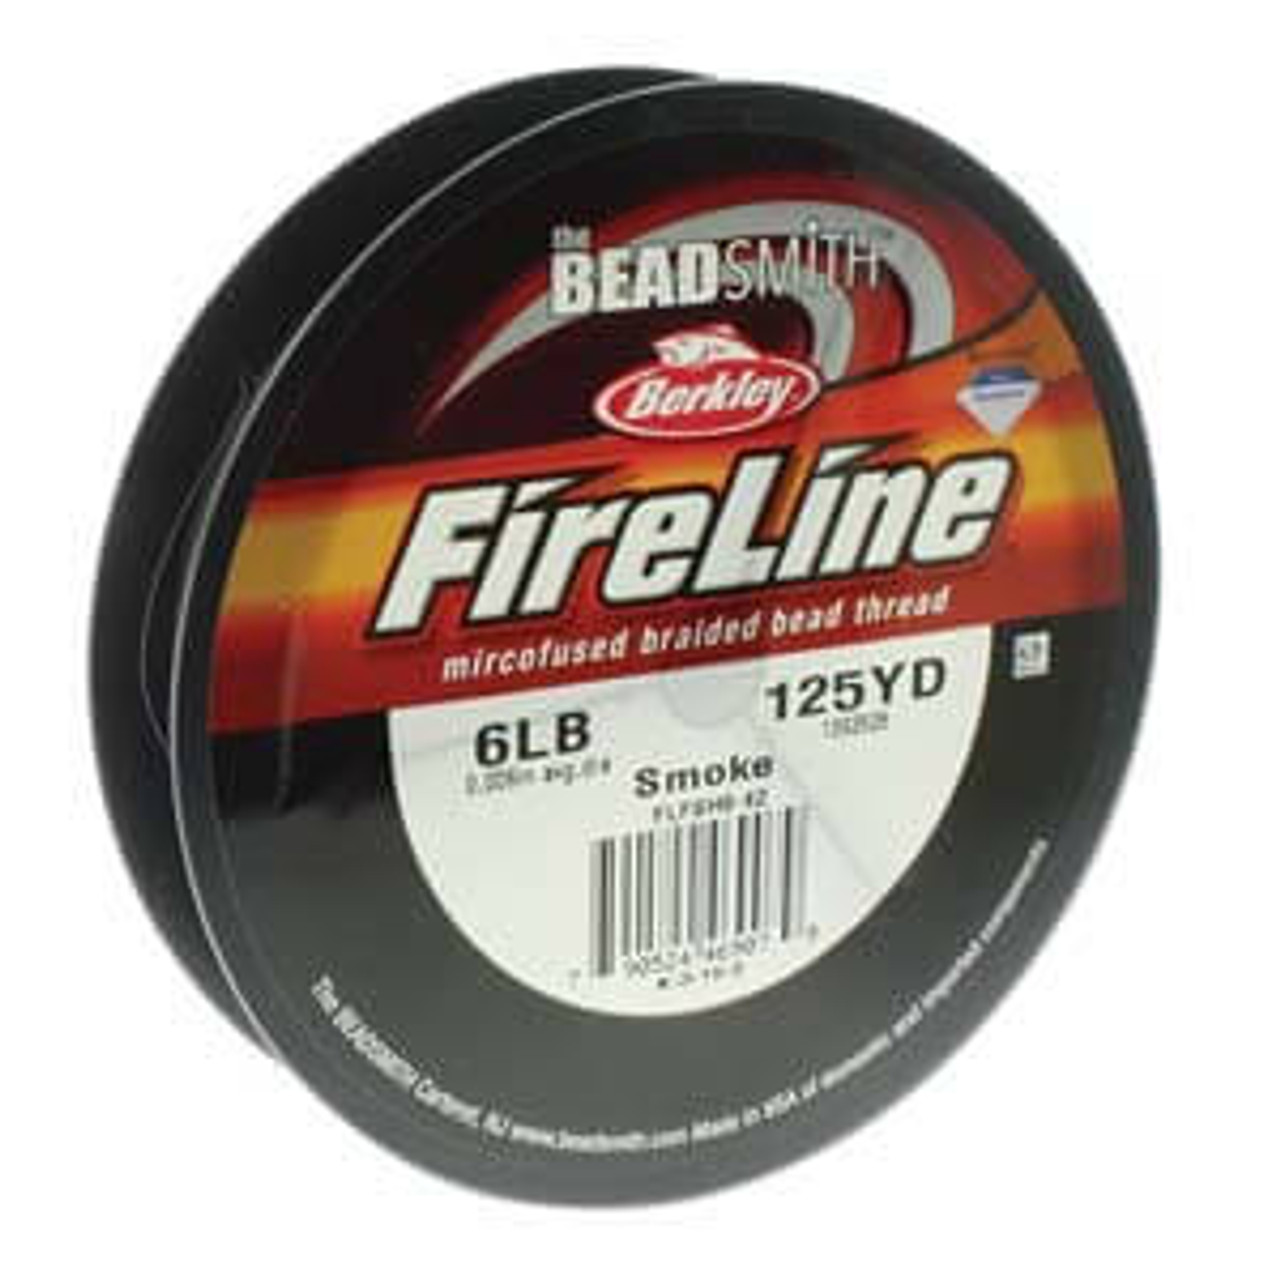 FireLine Braided Bead Thread - 6 lb - Smoke